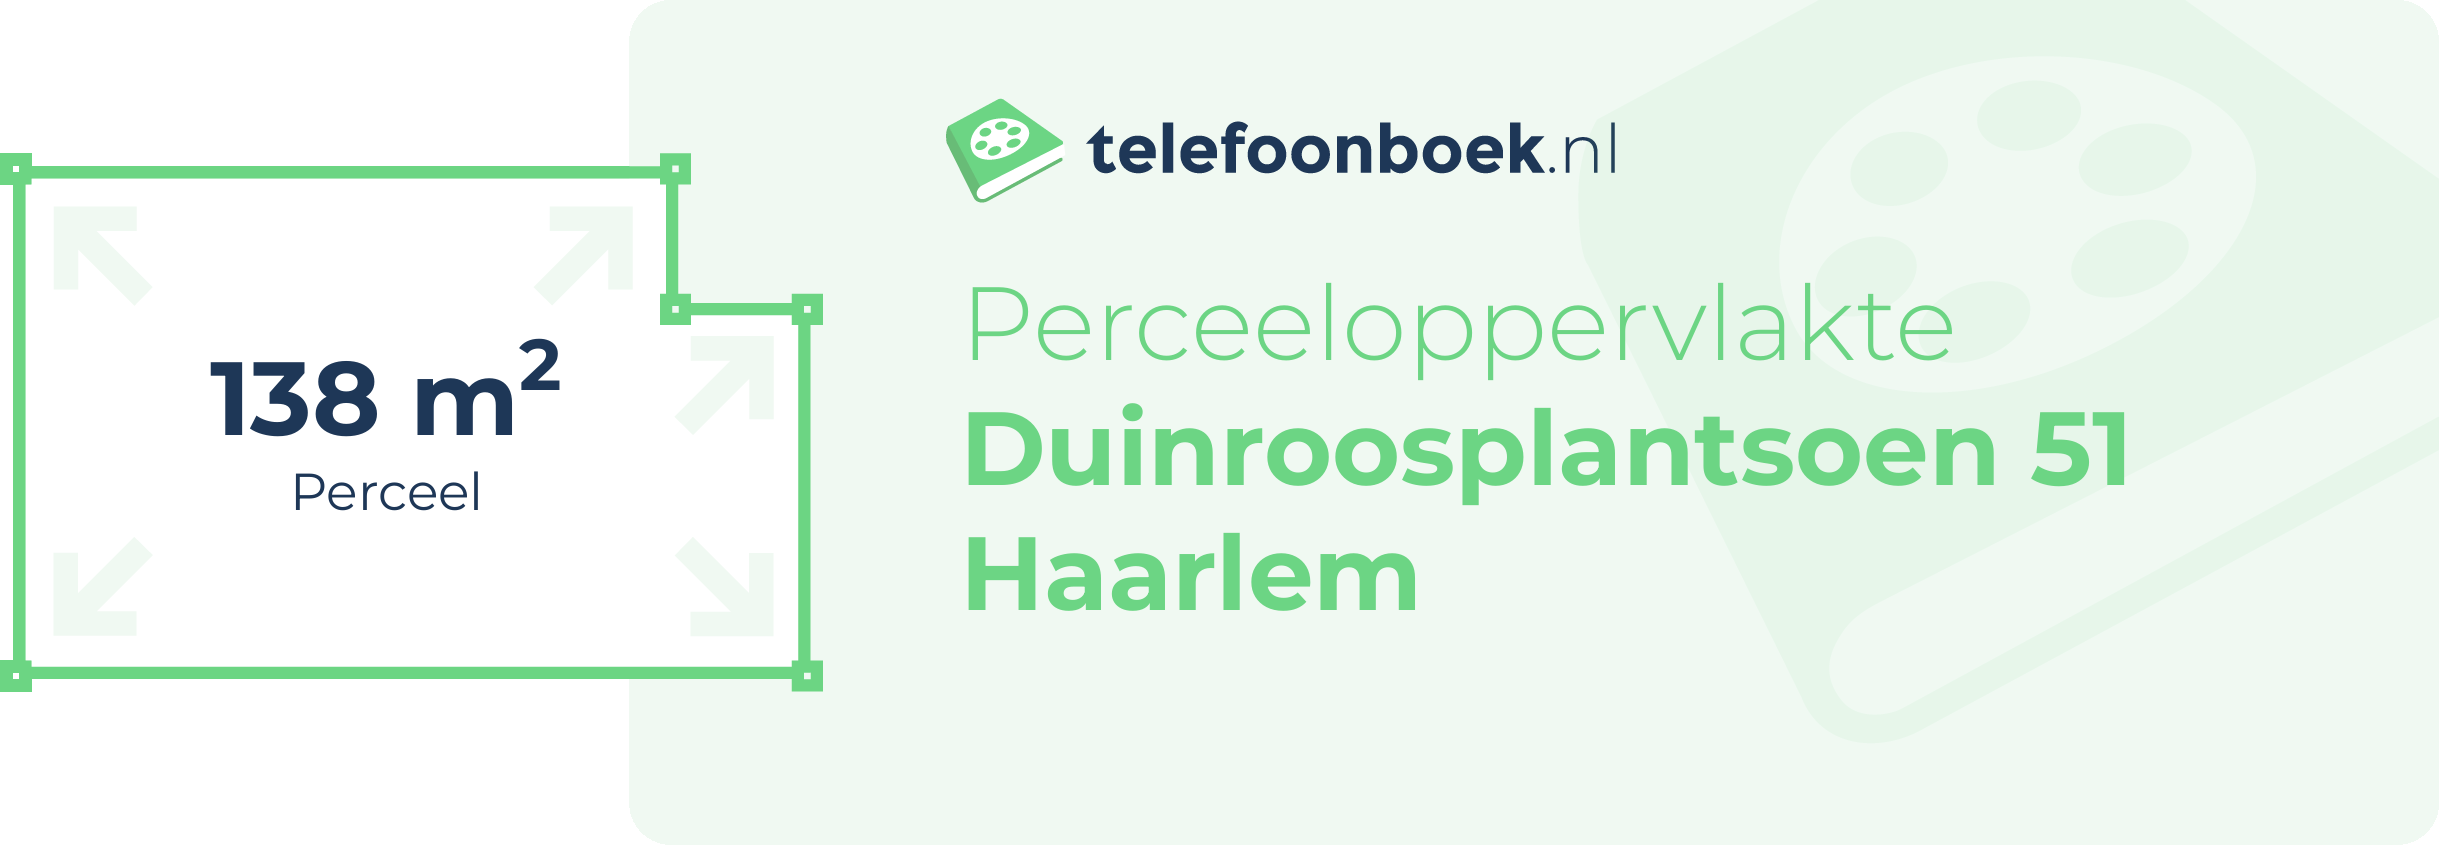 Perceeloppervlakte Duinroosplantsoen 51 Haarlem